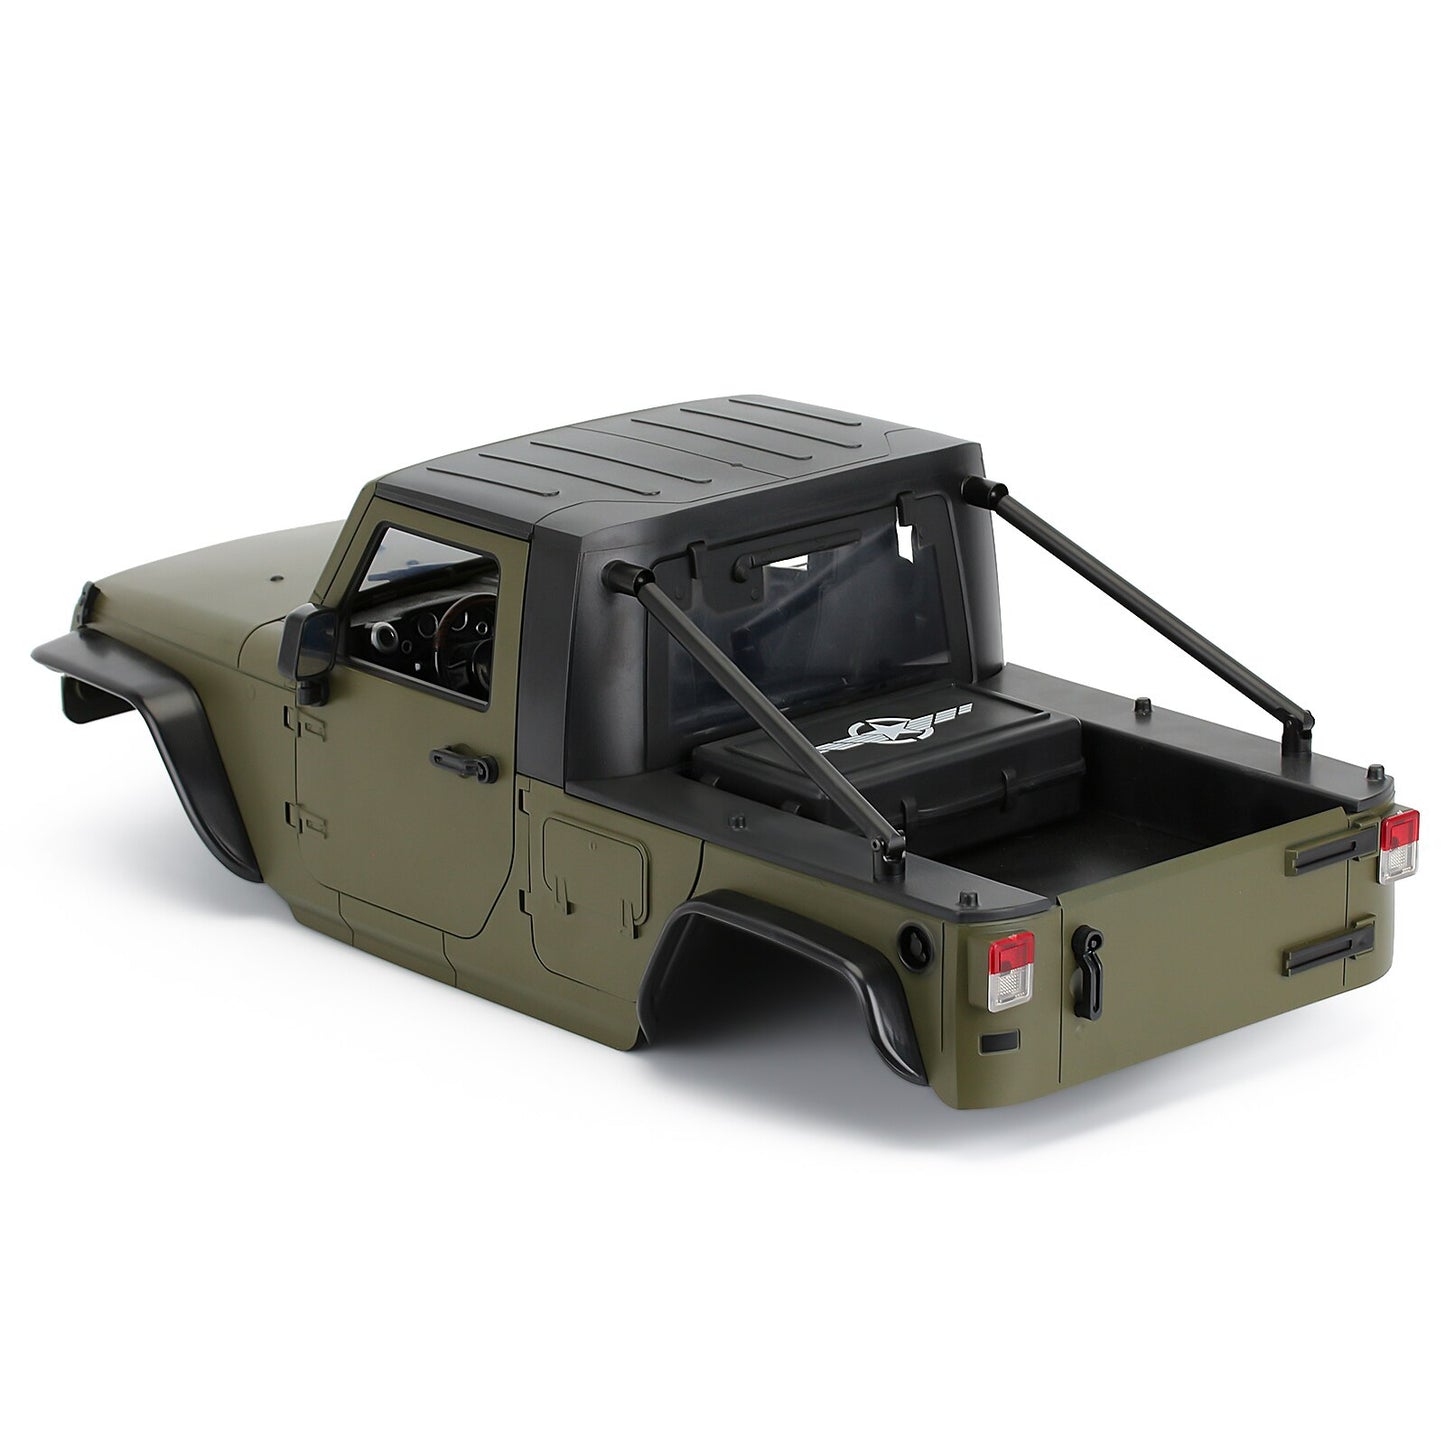 INJORA 12.3in 313mm Wielbasis Pickup Body Shell Ongemonteerde Kit voor 1/10 RC Crawler Auto Axiale SCX10 SCX10 II 90046 Jeep Wrangler